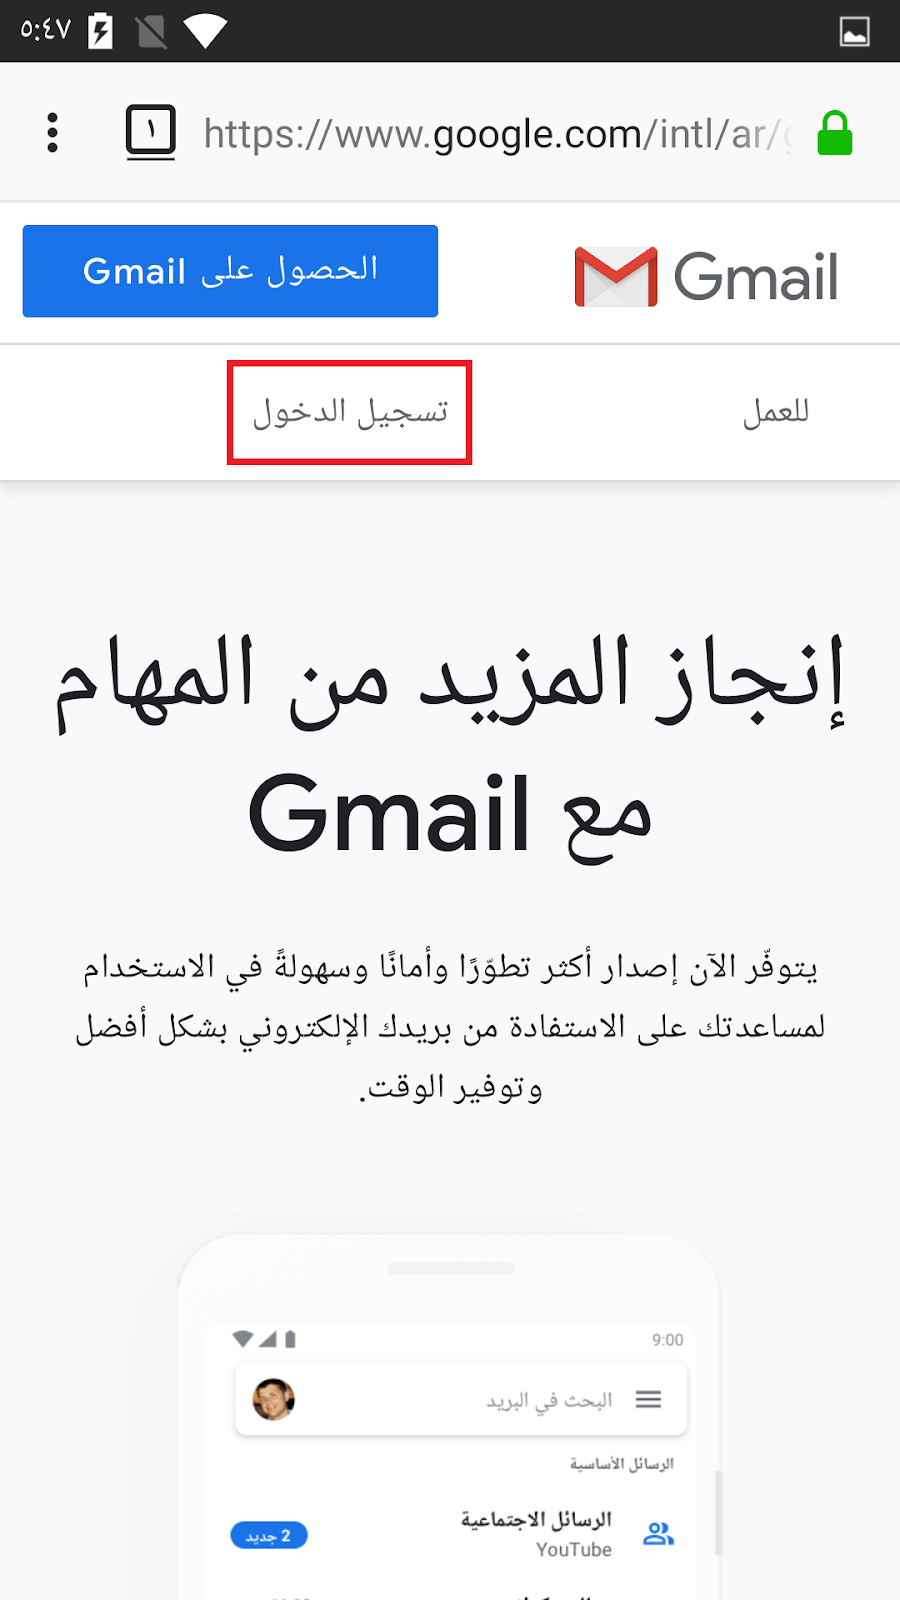 انشاء حساب جيميل gmail وشرح خطوات